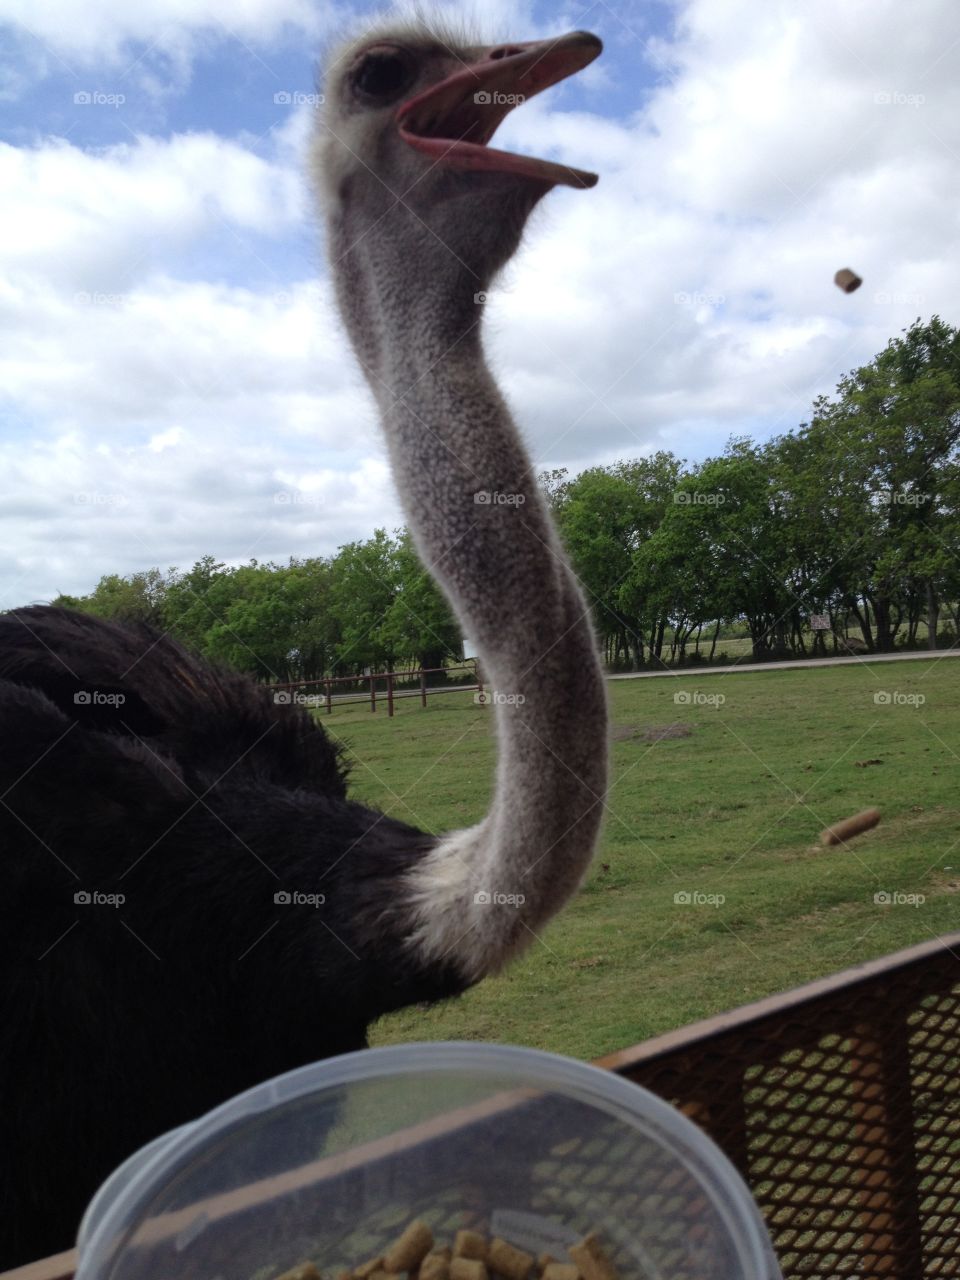 I Got it. Ostrich catching food